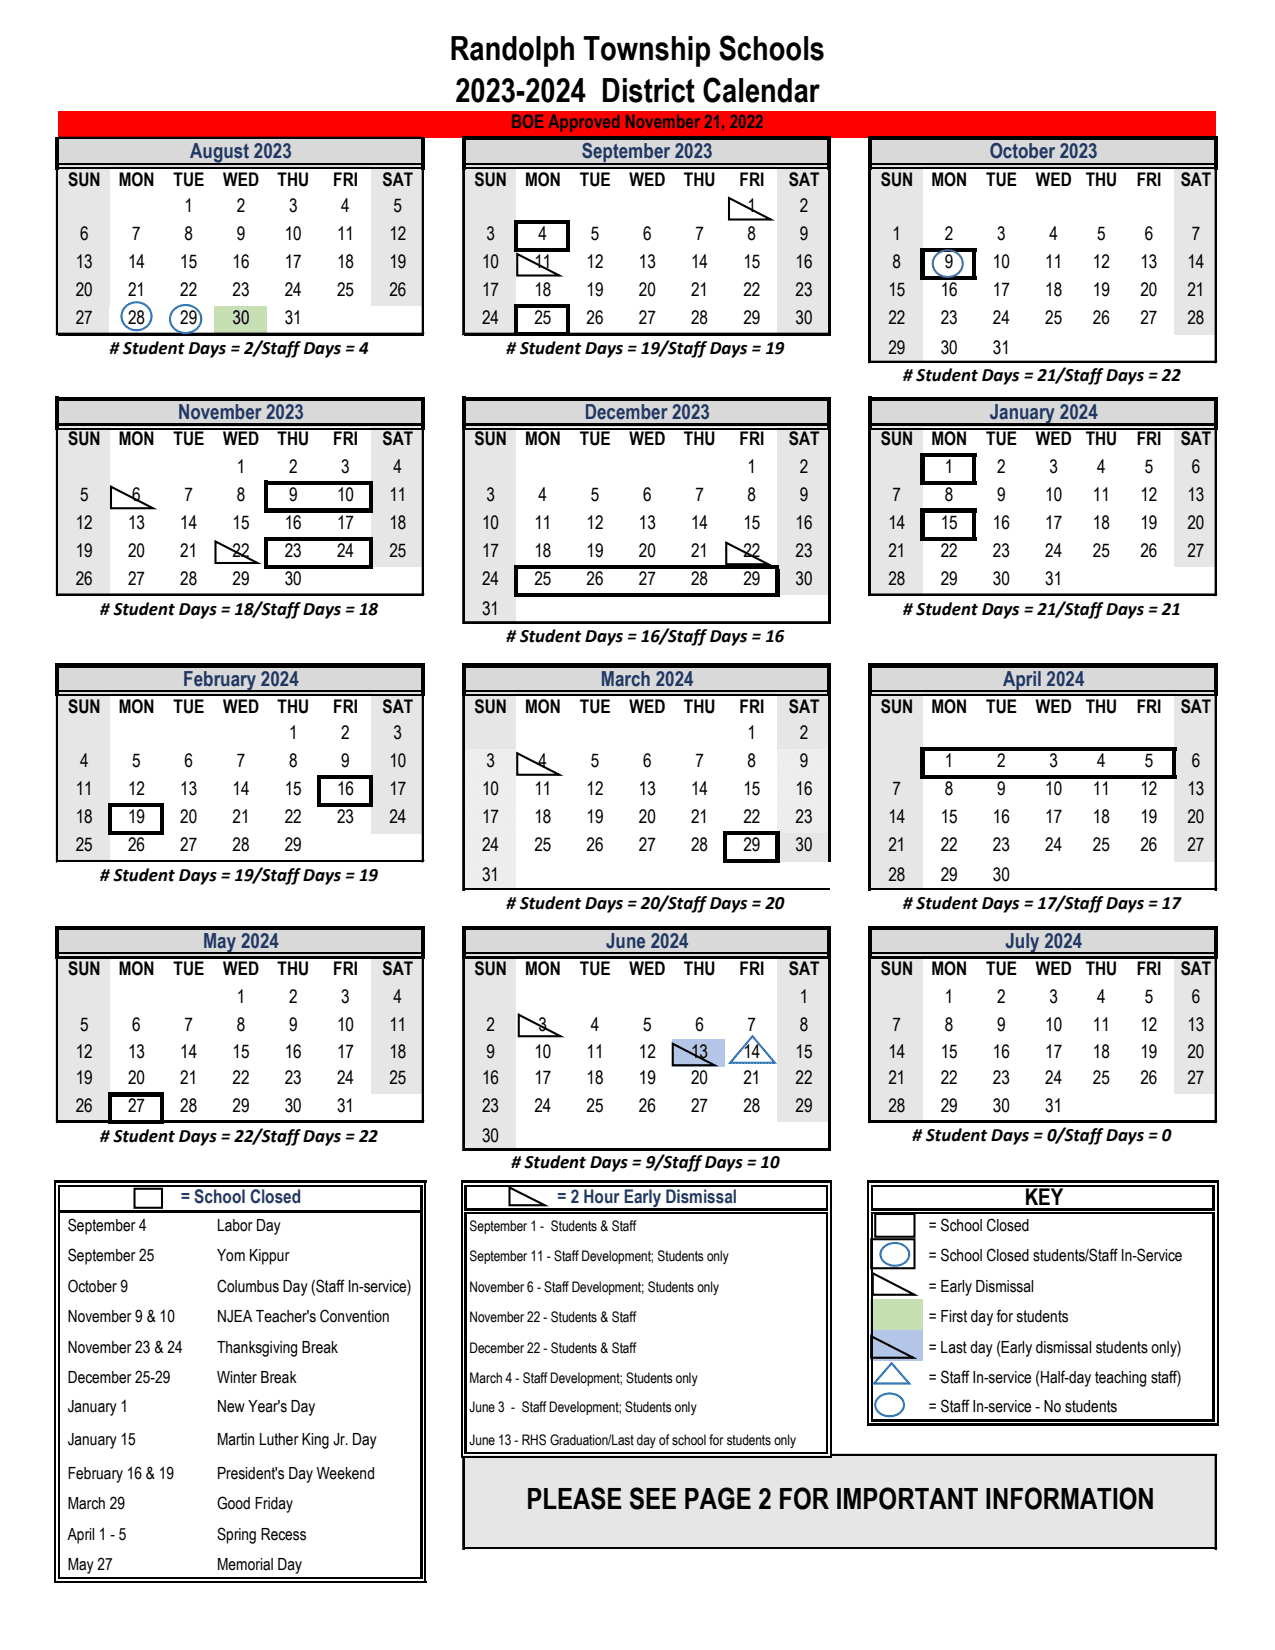 Randolph Township School District Calendar 20242025 in PDF